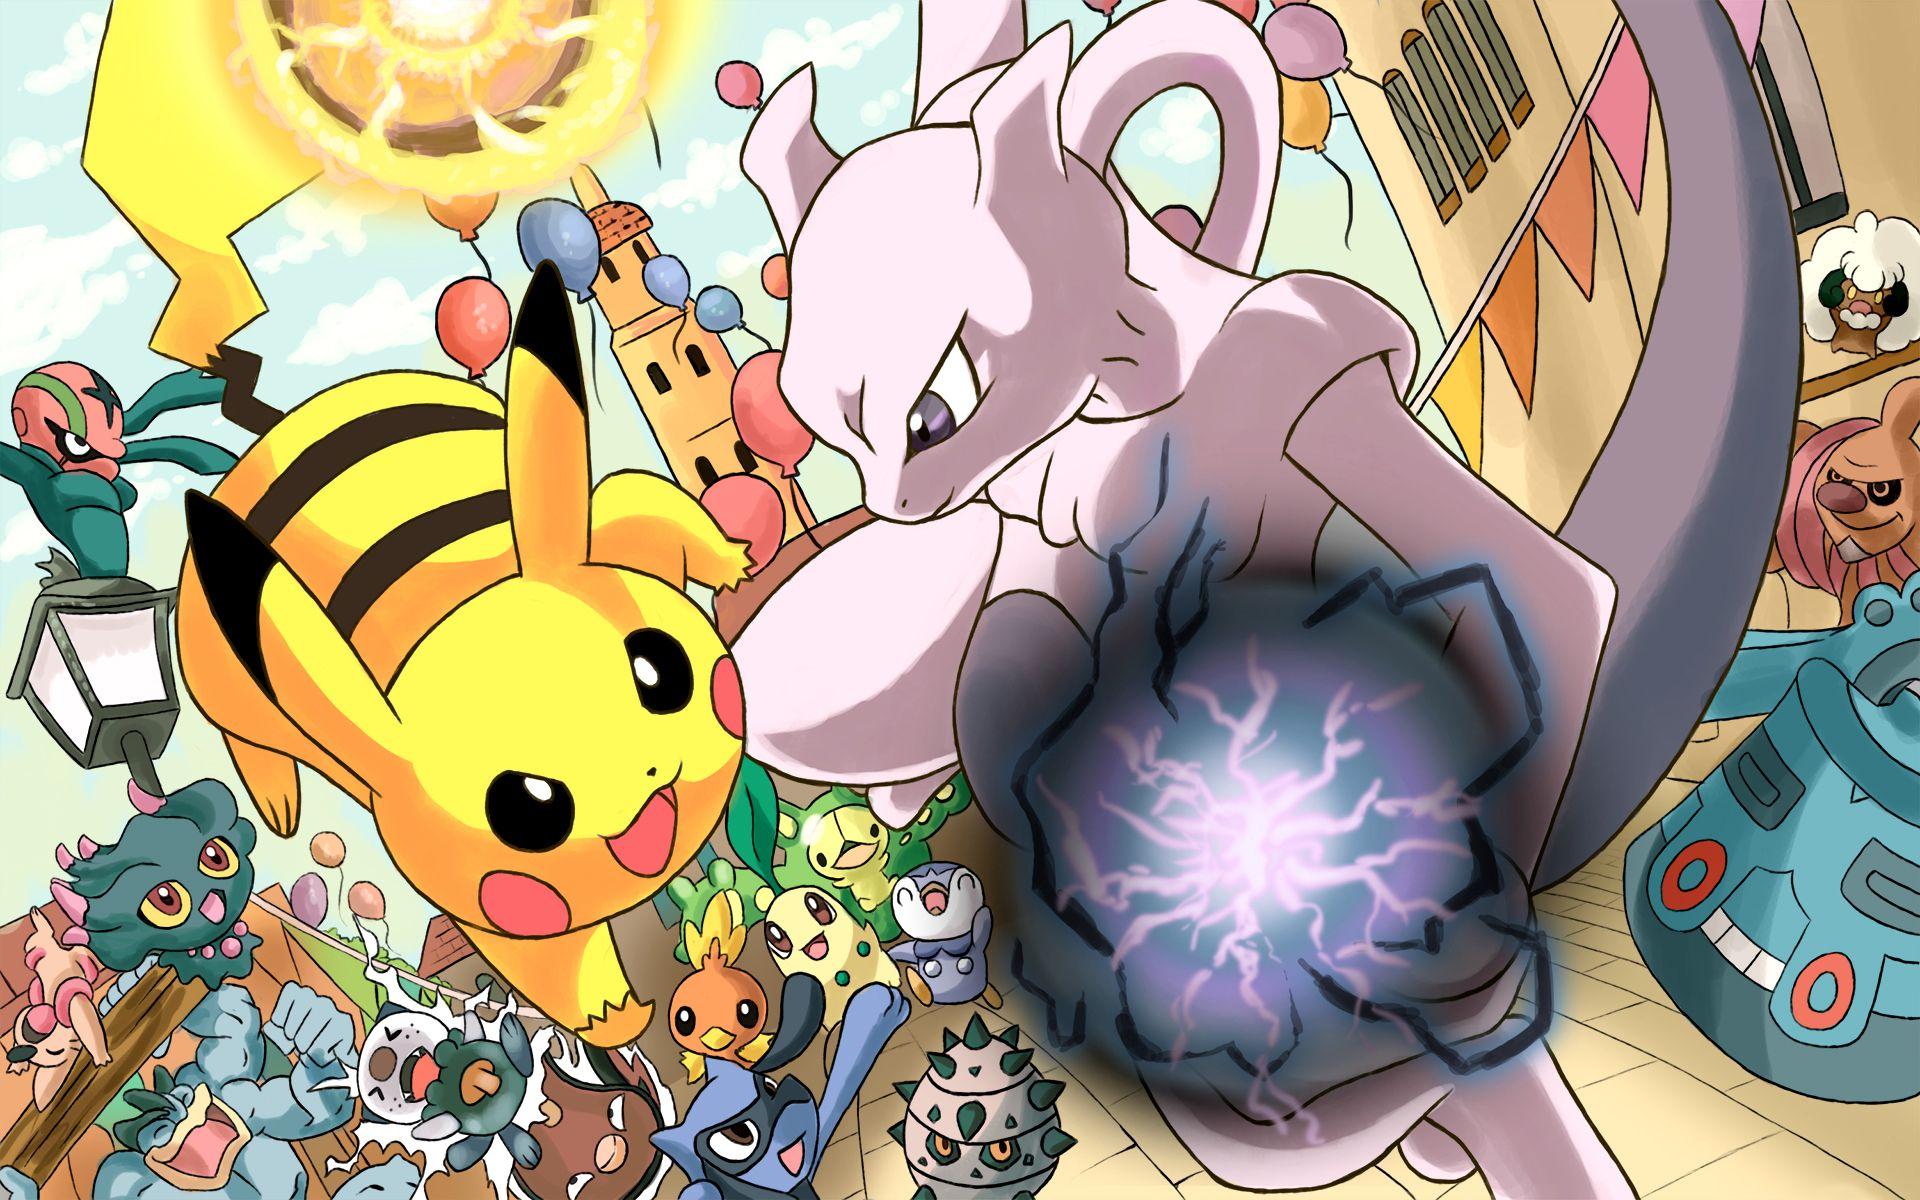 pikachu vs mewtwo HD wallpaper download for free. HD